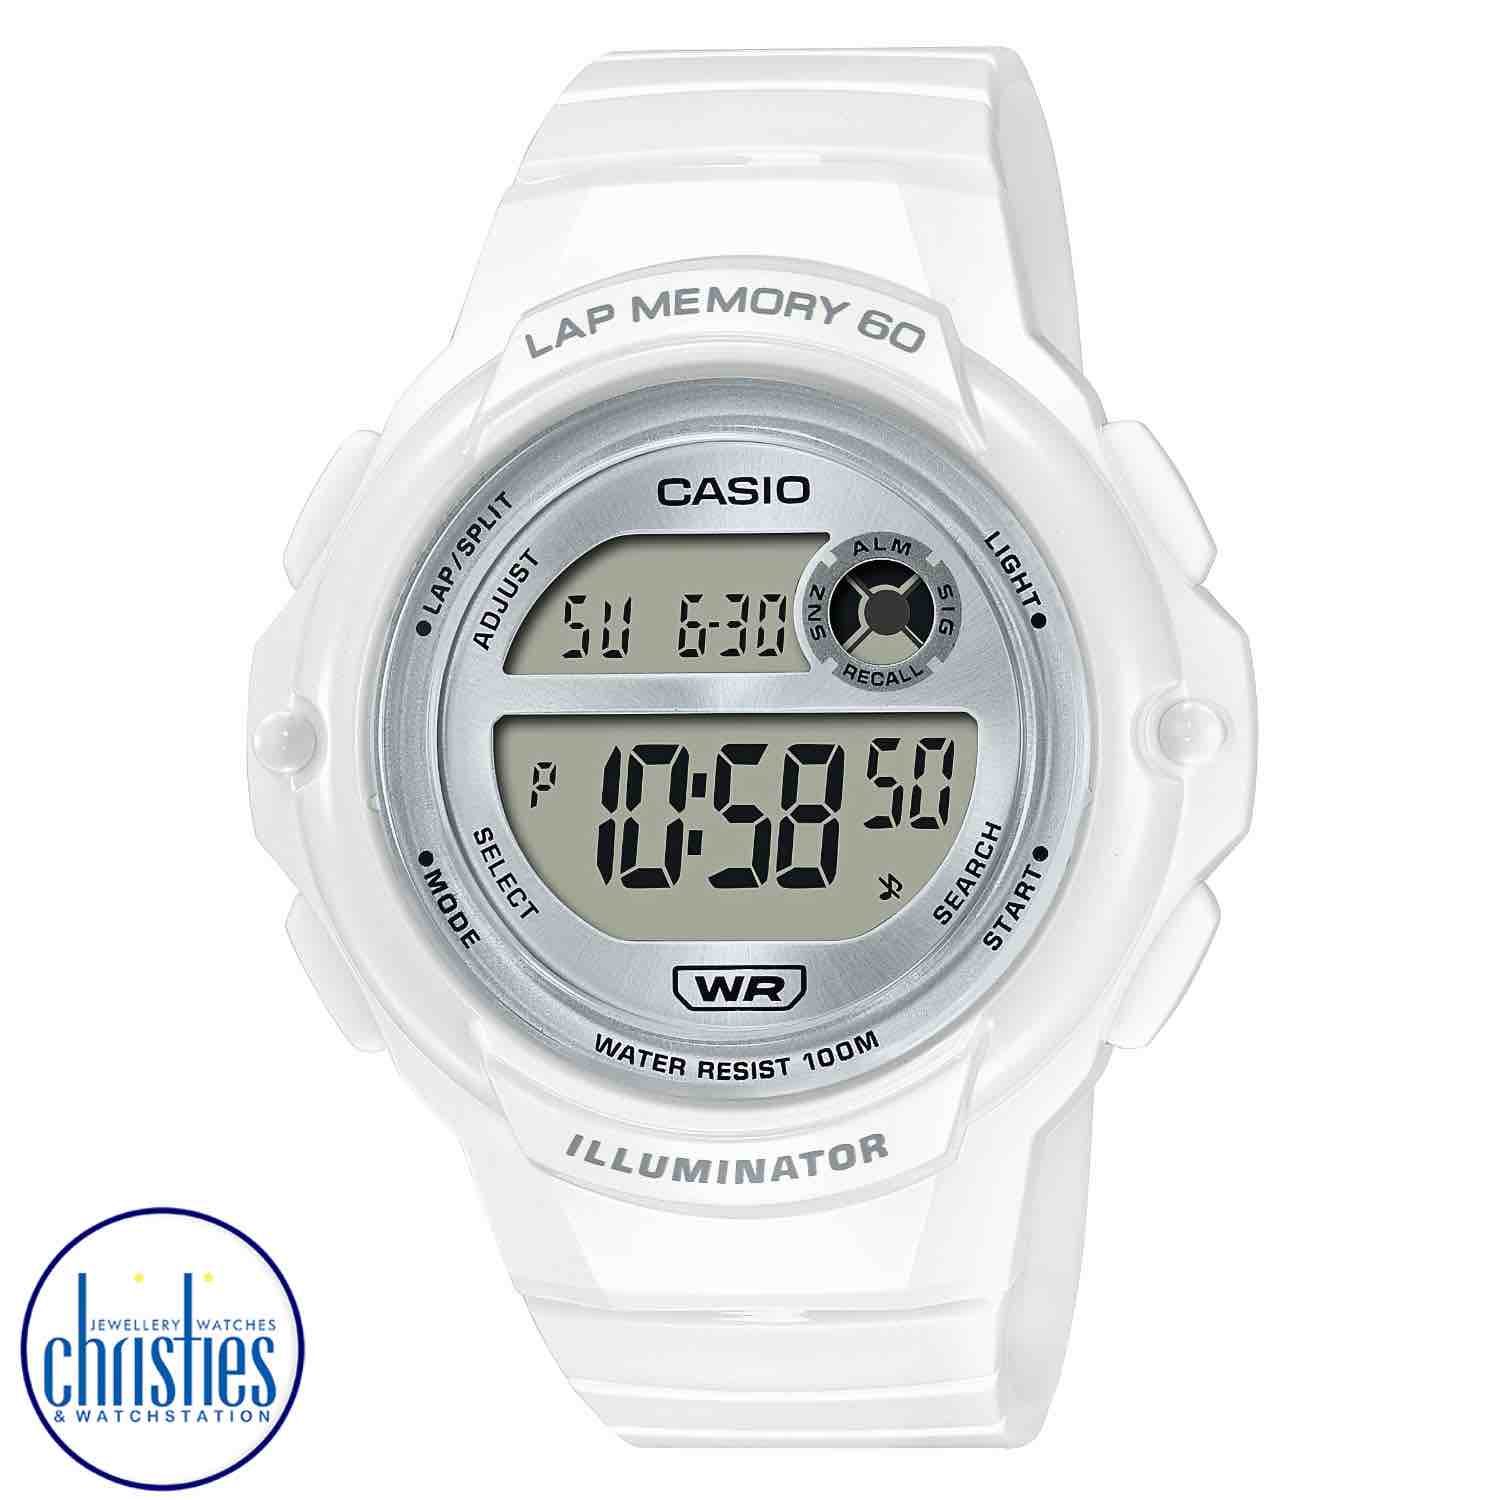 LWS1200H-7A1 Casio 60 Lap Memory Watch cheap casio watches nz